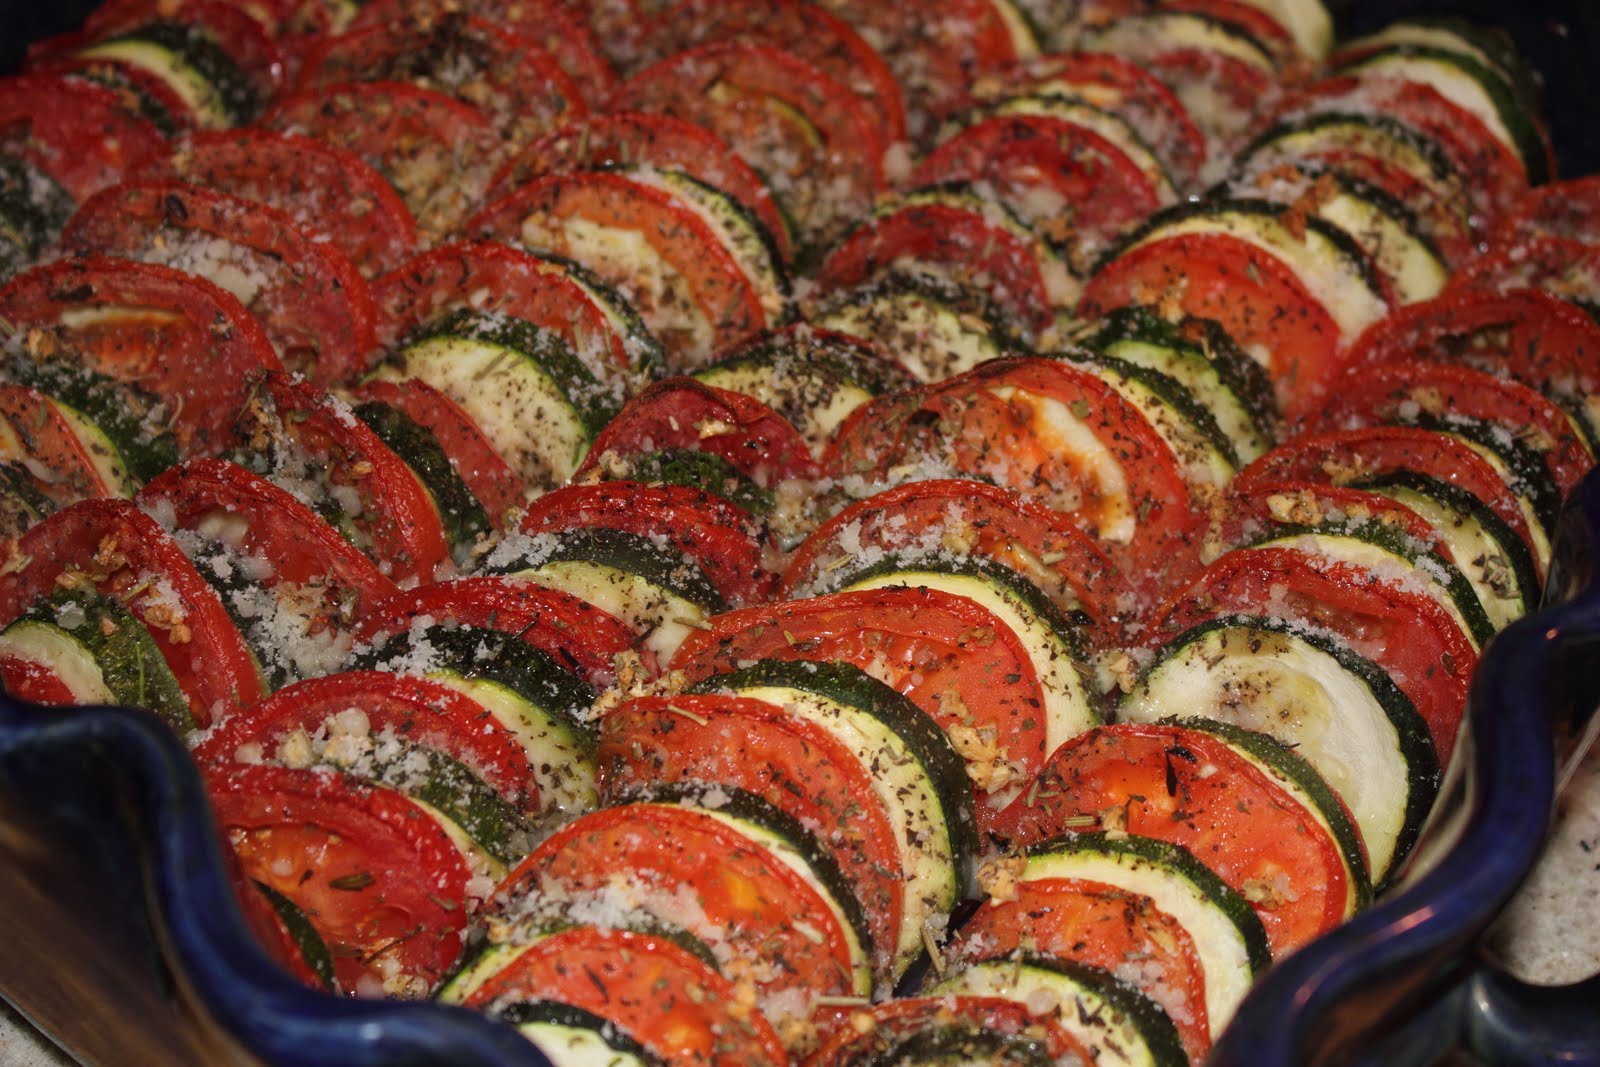 Charlotte & Spice: Zucchini and Tomato au Gratin